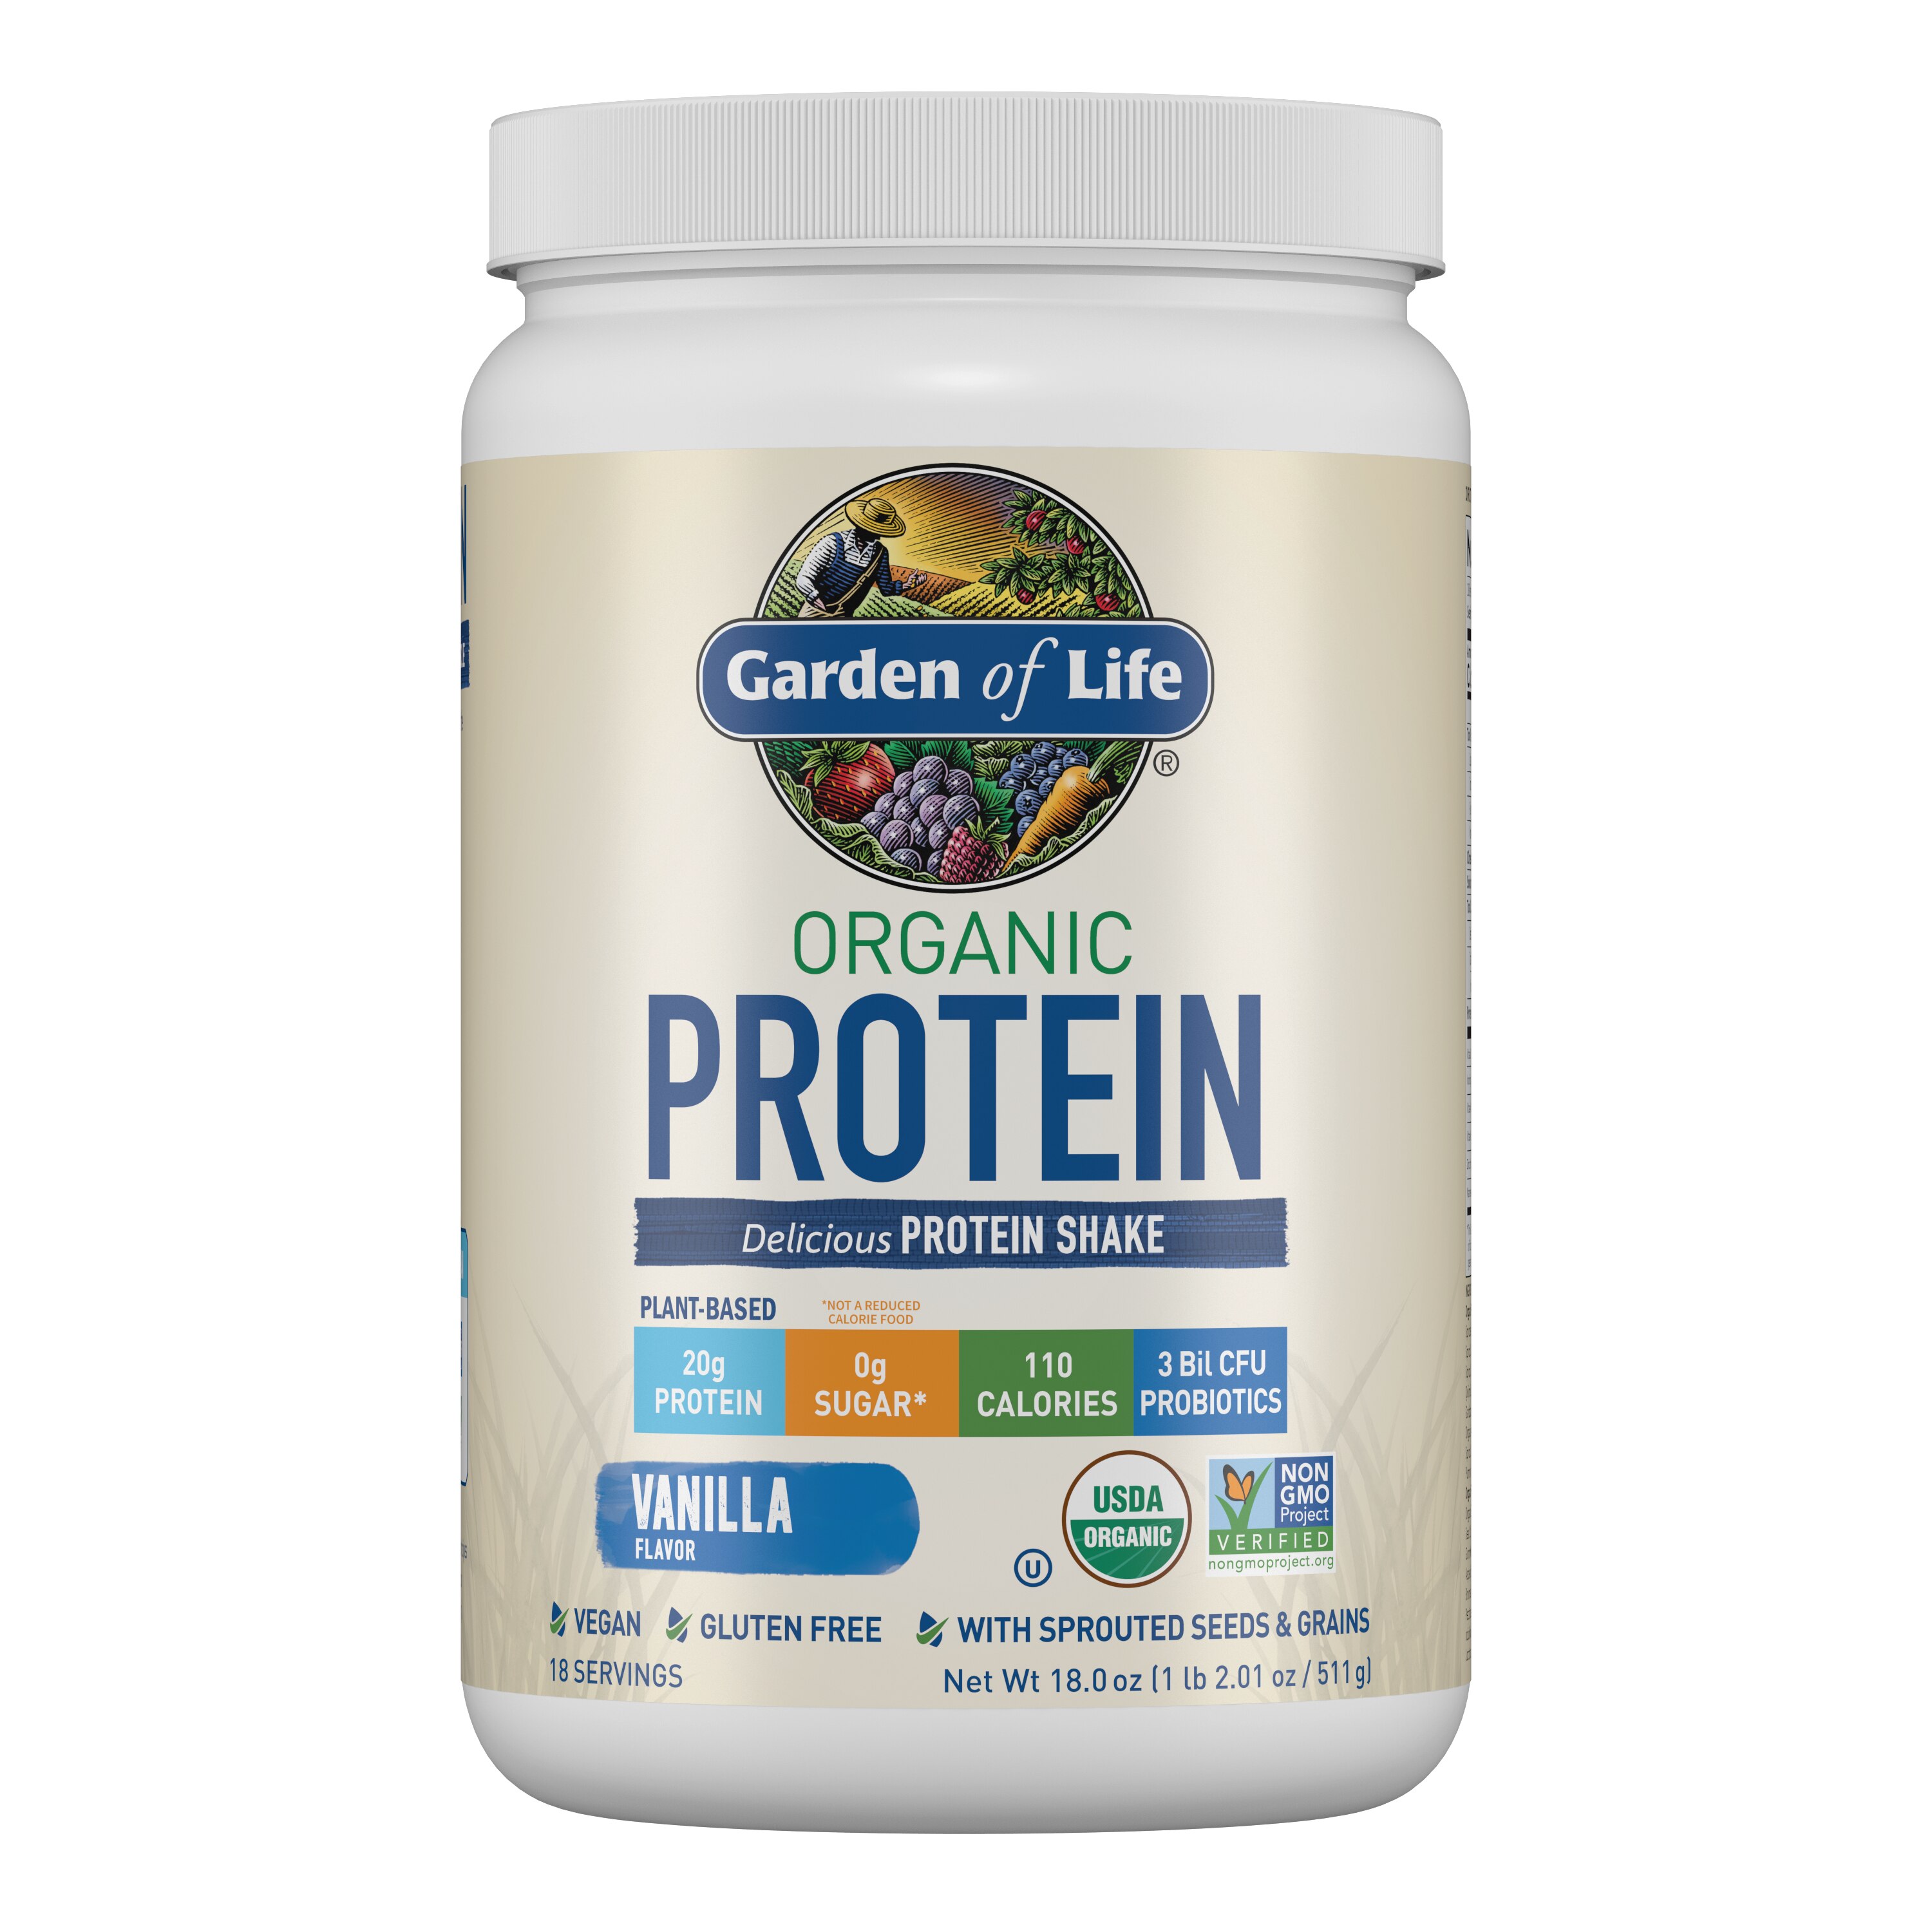 Garden of Life Organic Protein Powder